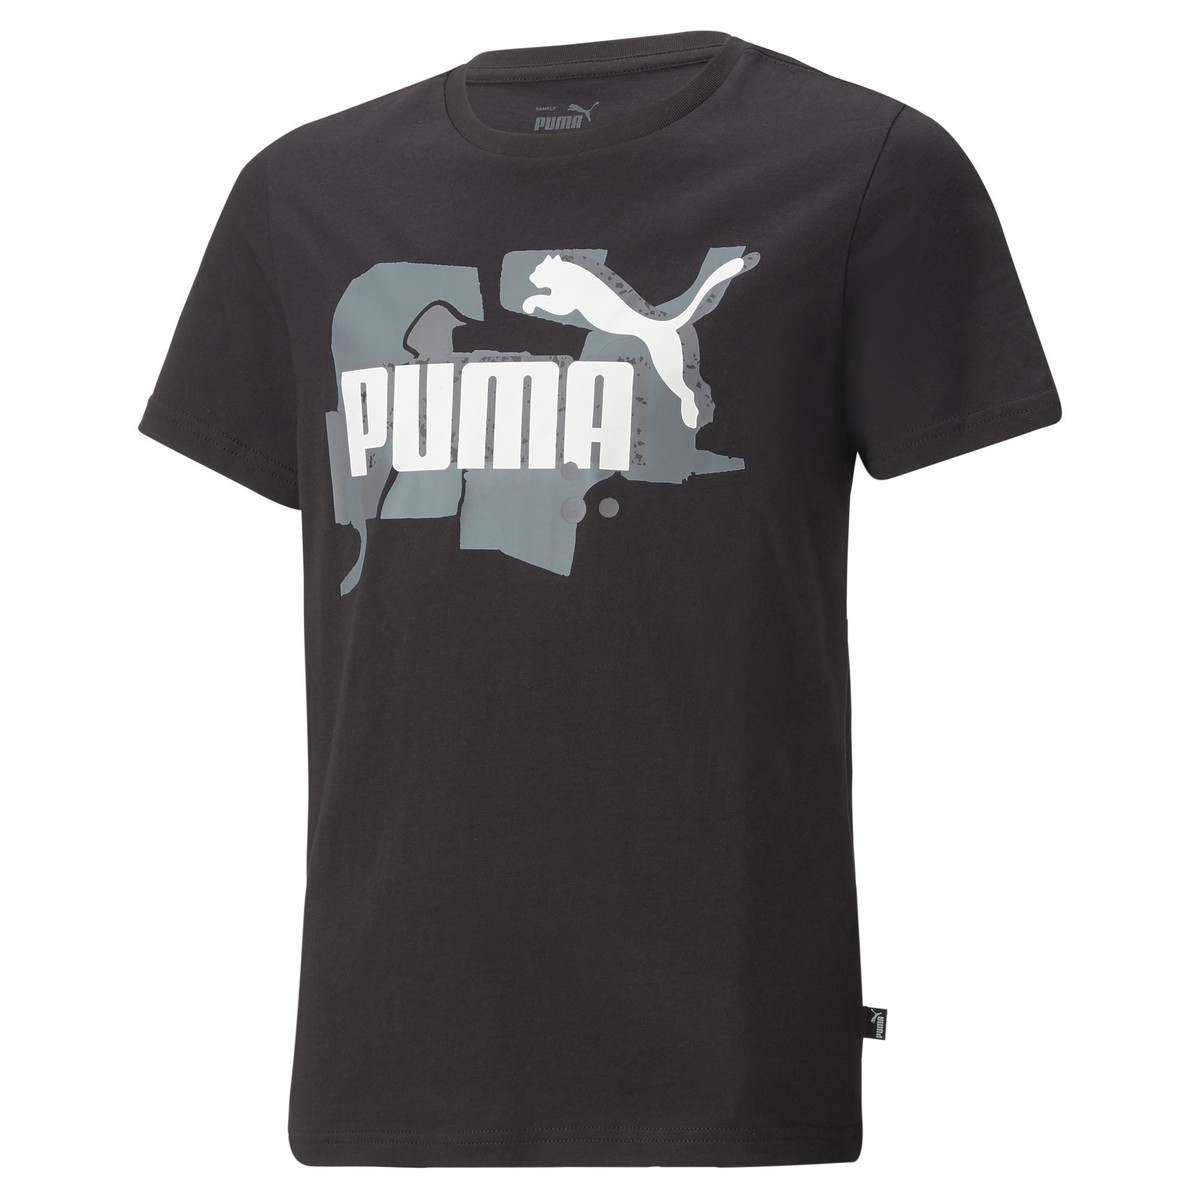 Weitere Preissenkungen! Puma ESS STREET ART Child | - Spartoo NET short-sleeved - Clothing delivery ! t-shirts Black Free LOGO